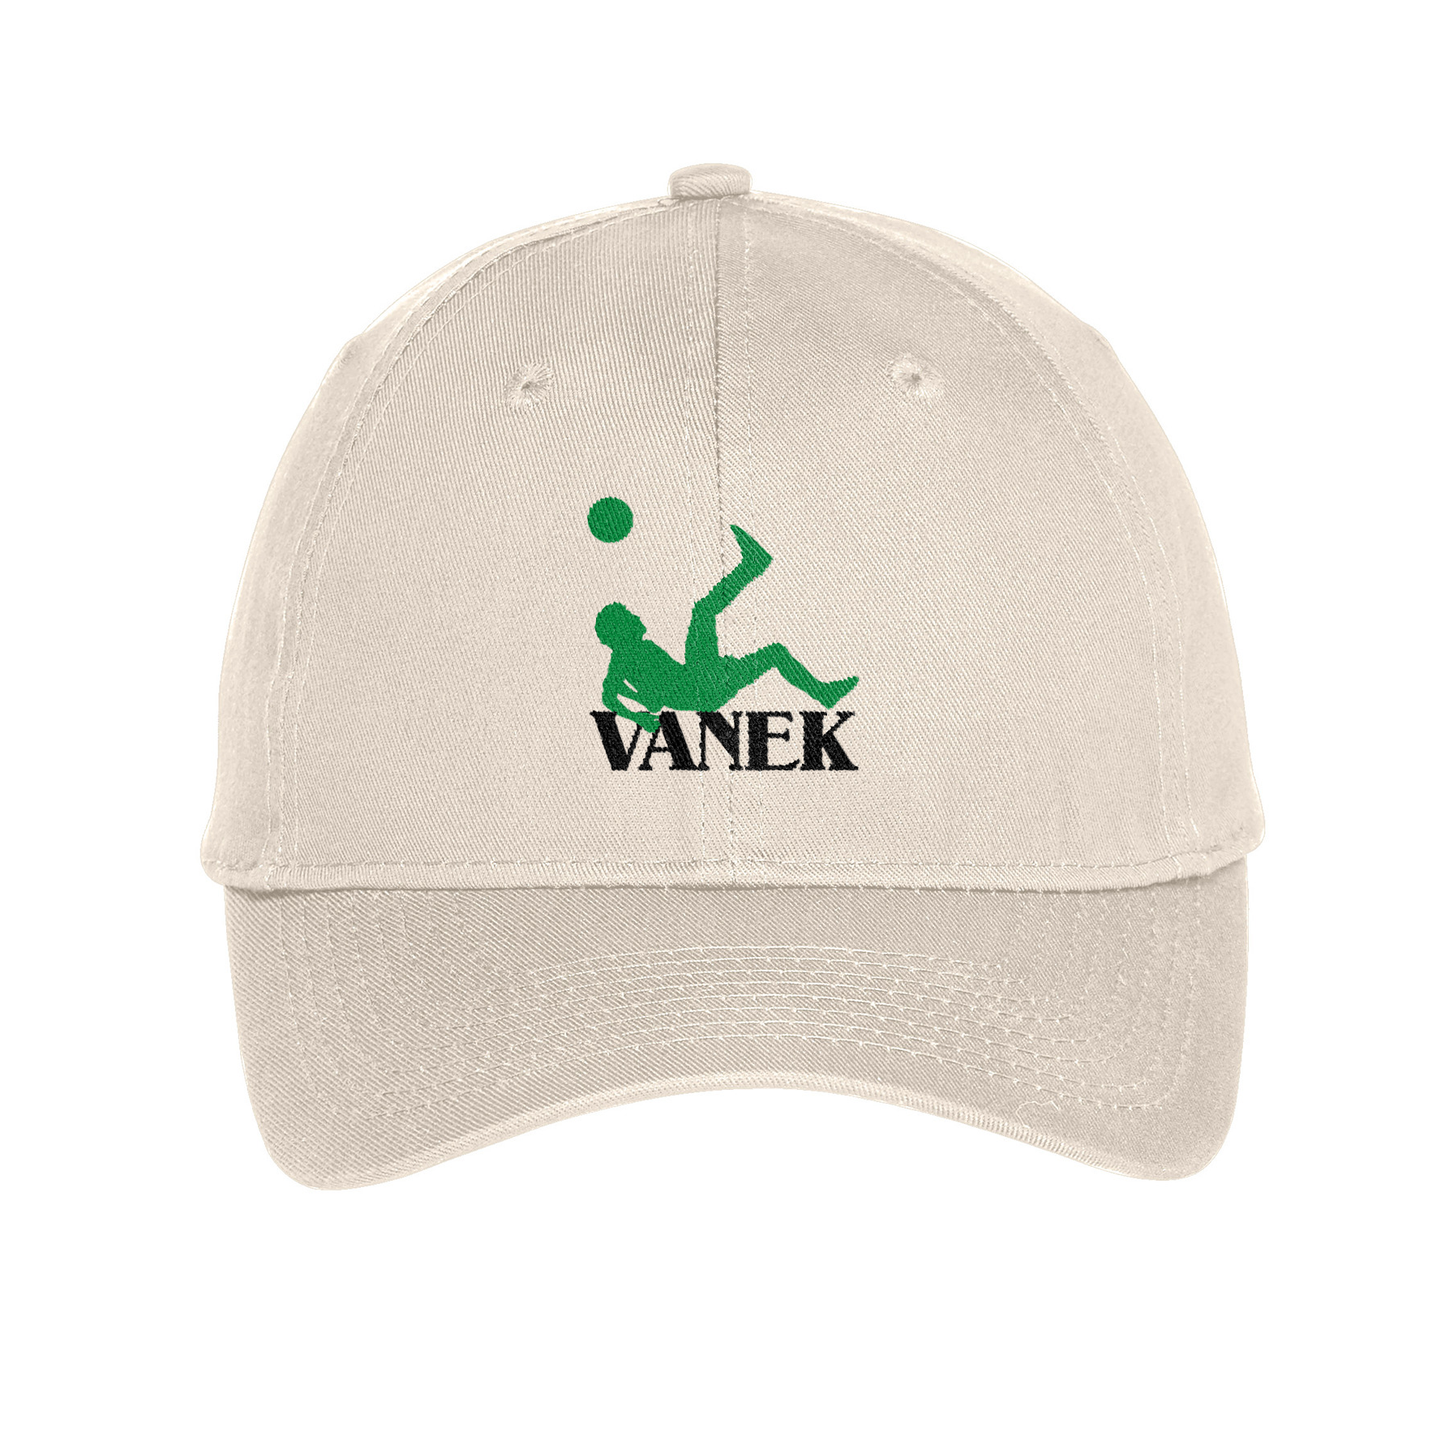 GT Vanek Embroidered Twill Cap